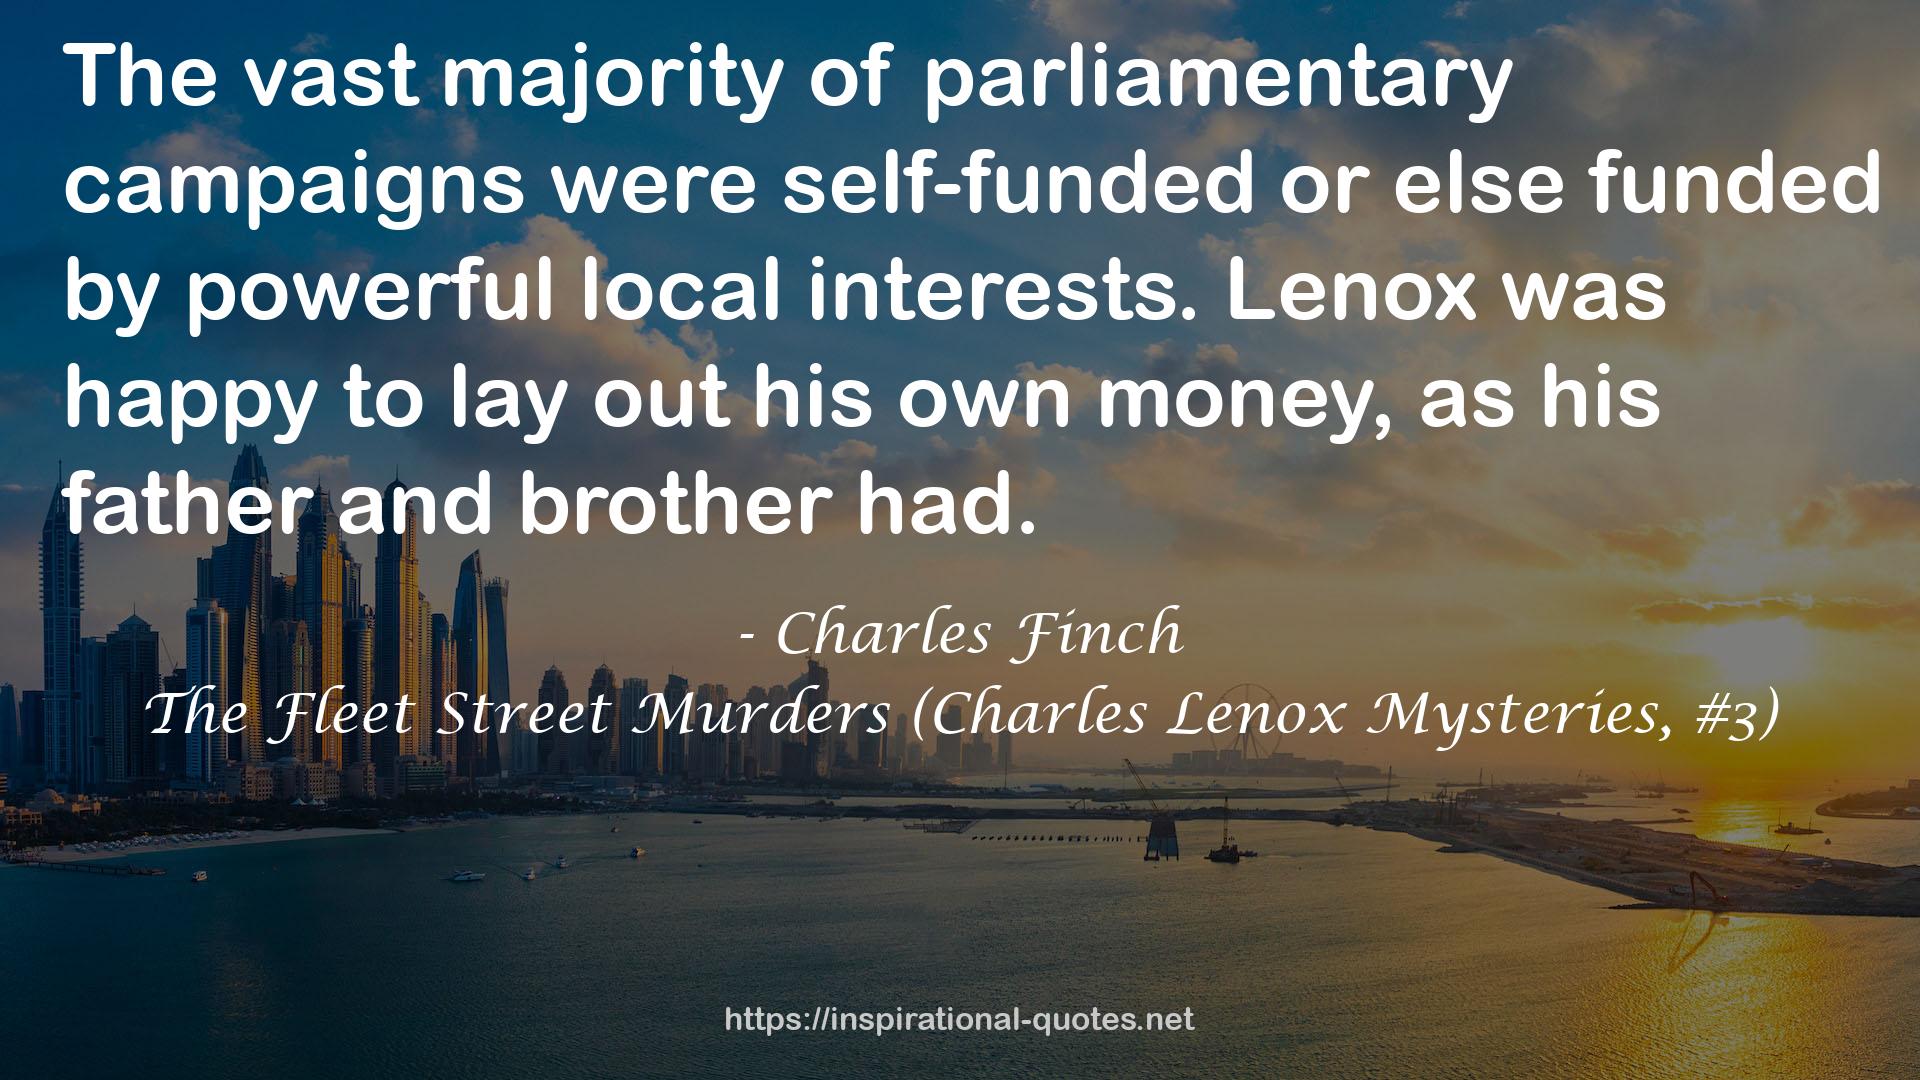 The Fleet Street Murders (Charles Lenox Mysteries, #3) QUOTES